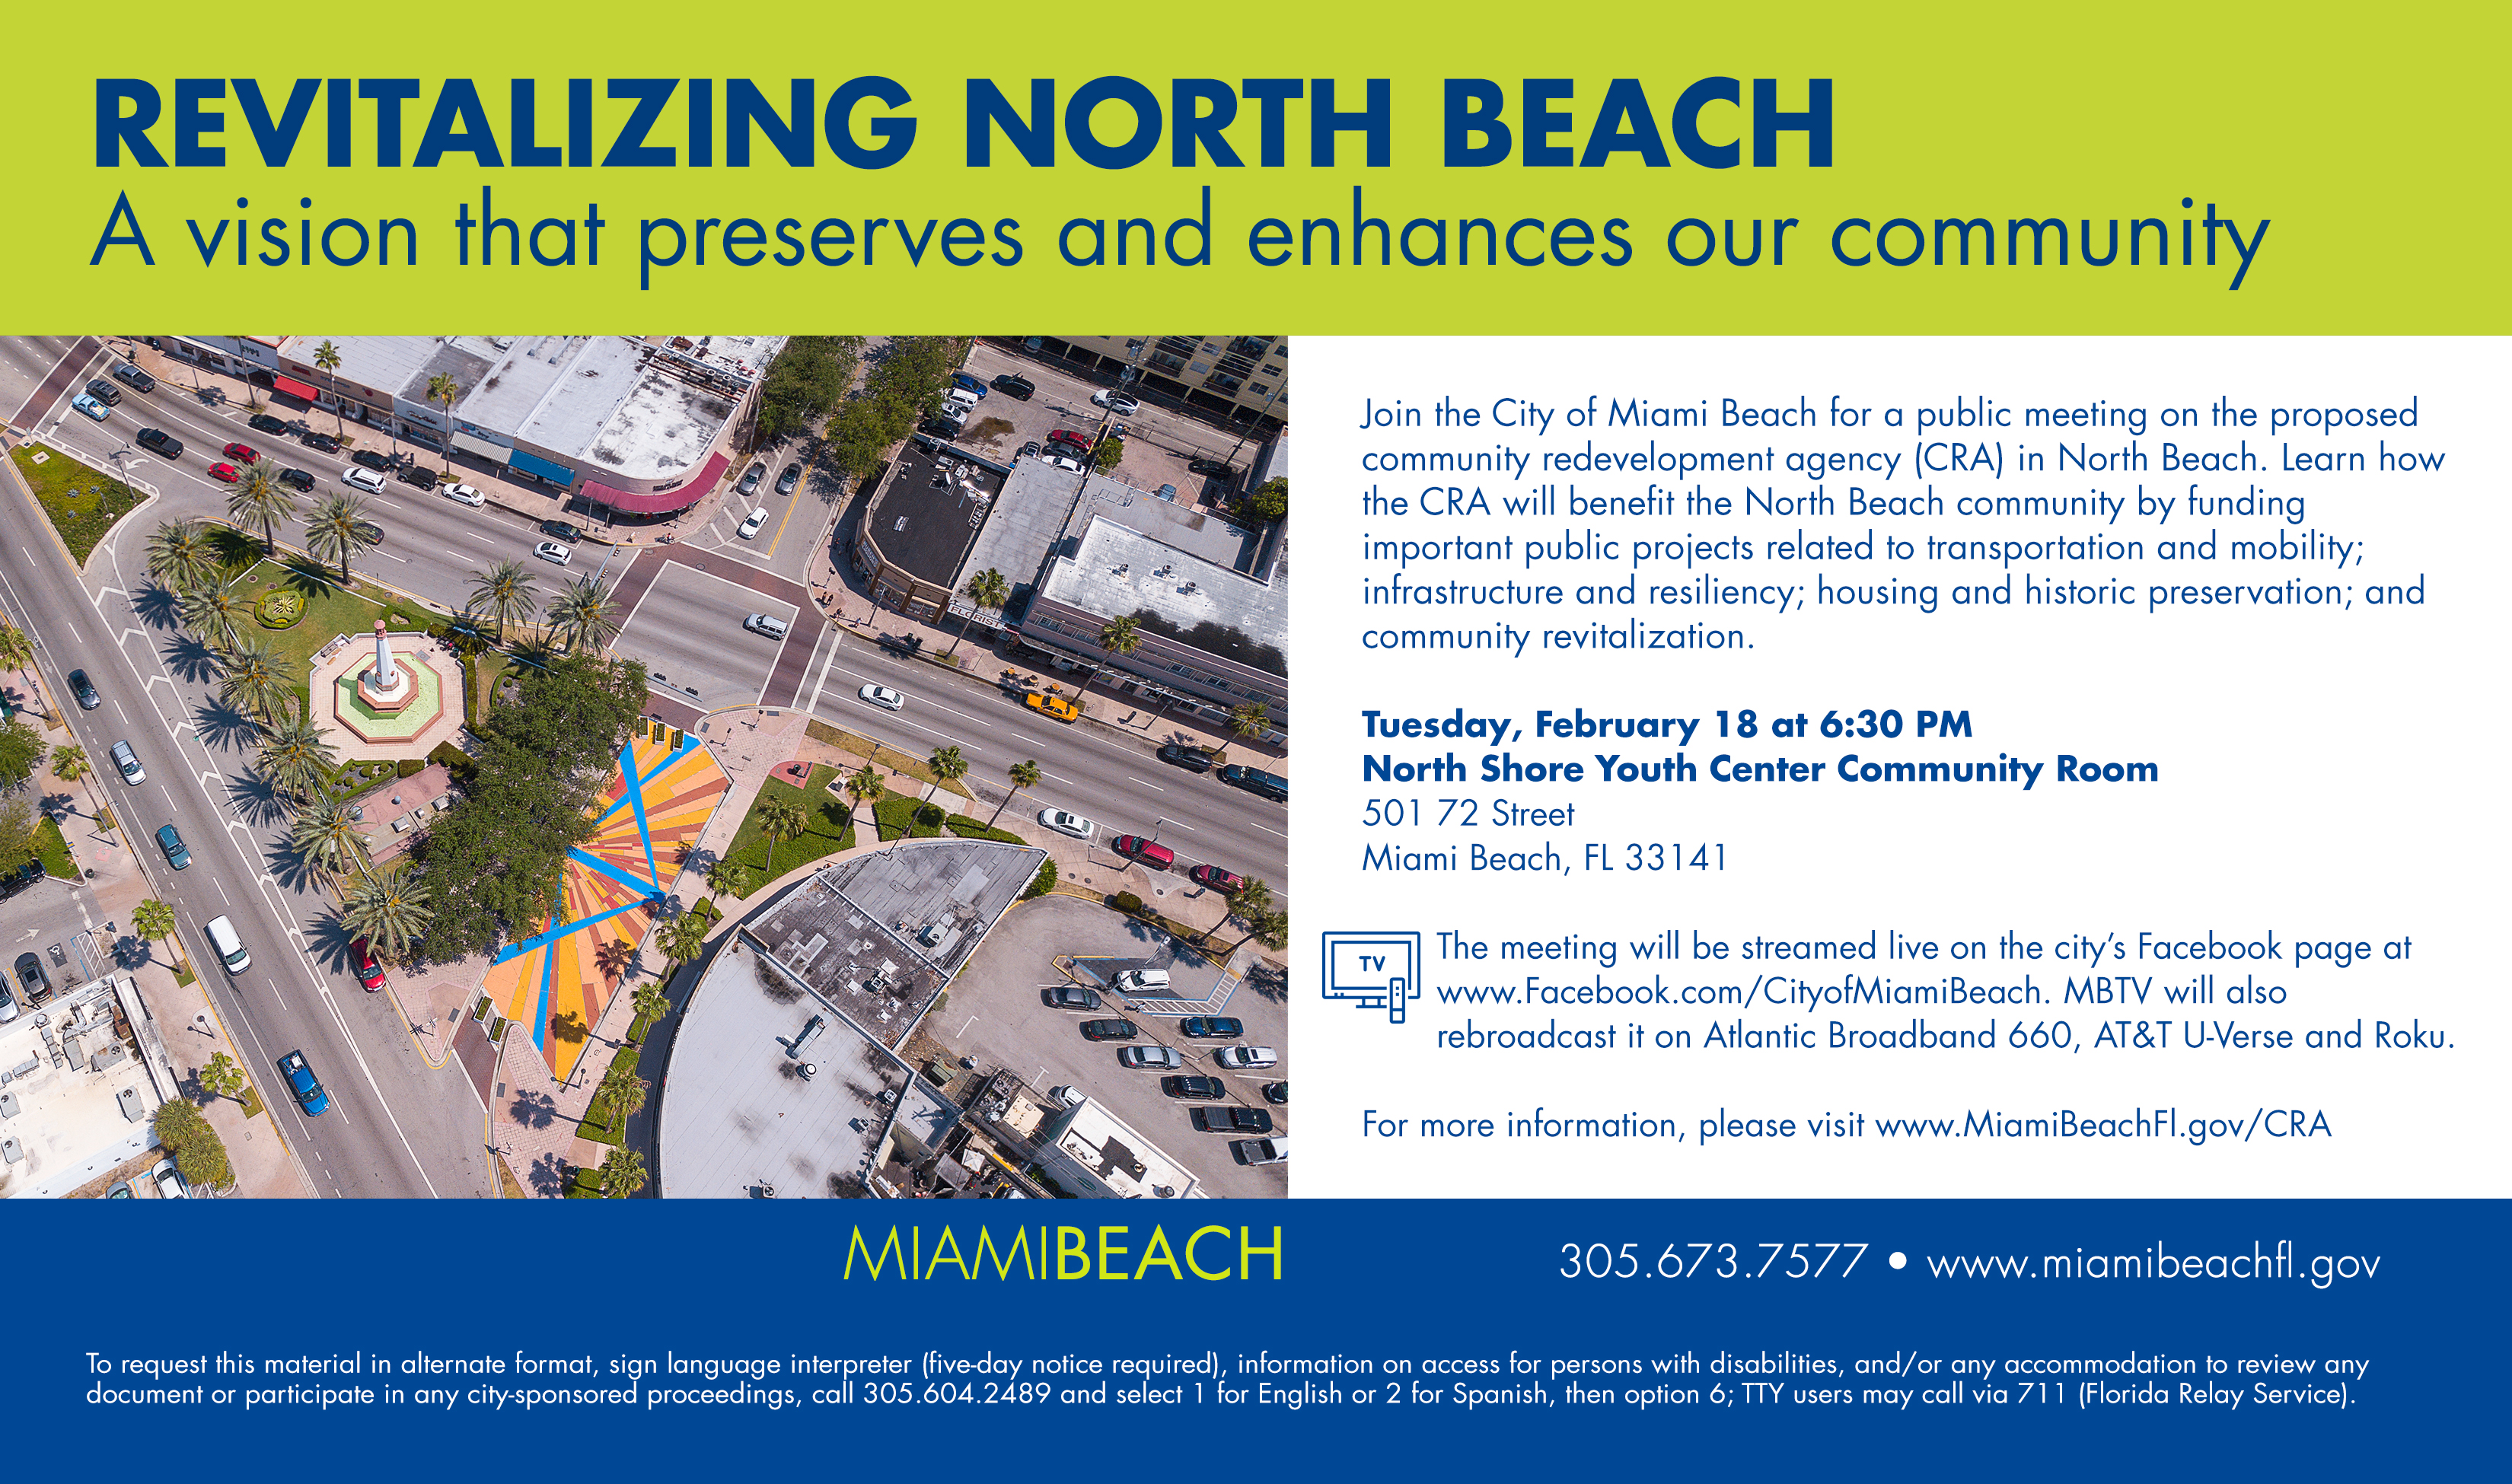 Revitalizing North Beach – Community Redevelopment Agency (CRA) Public Meeting